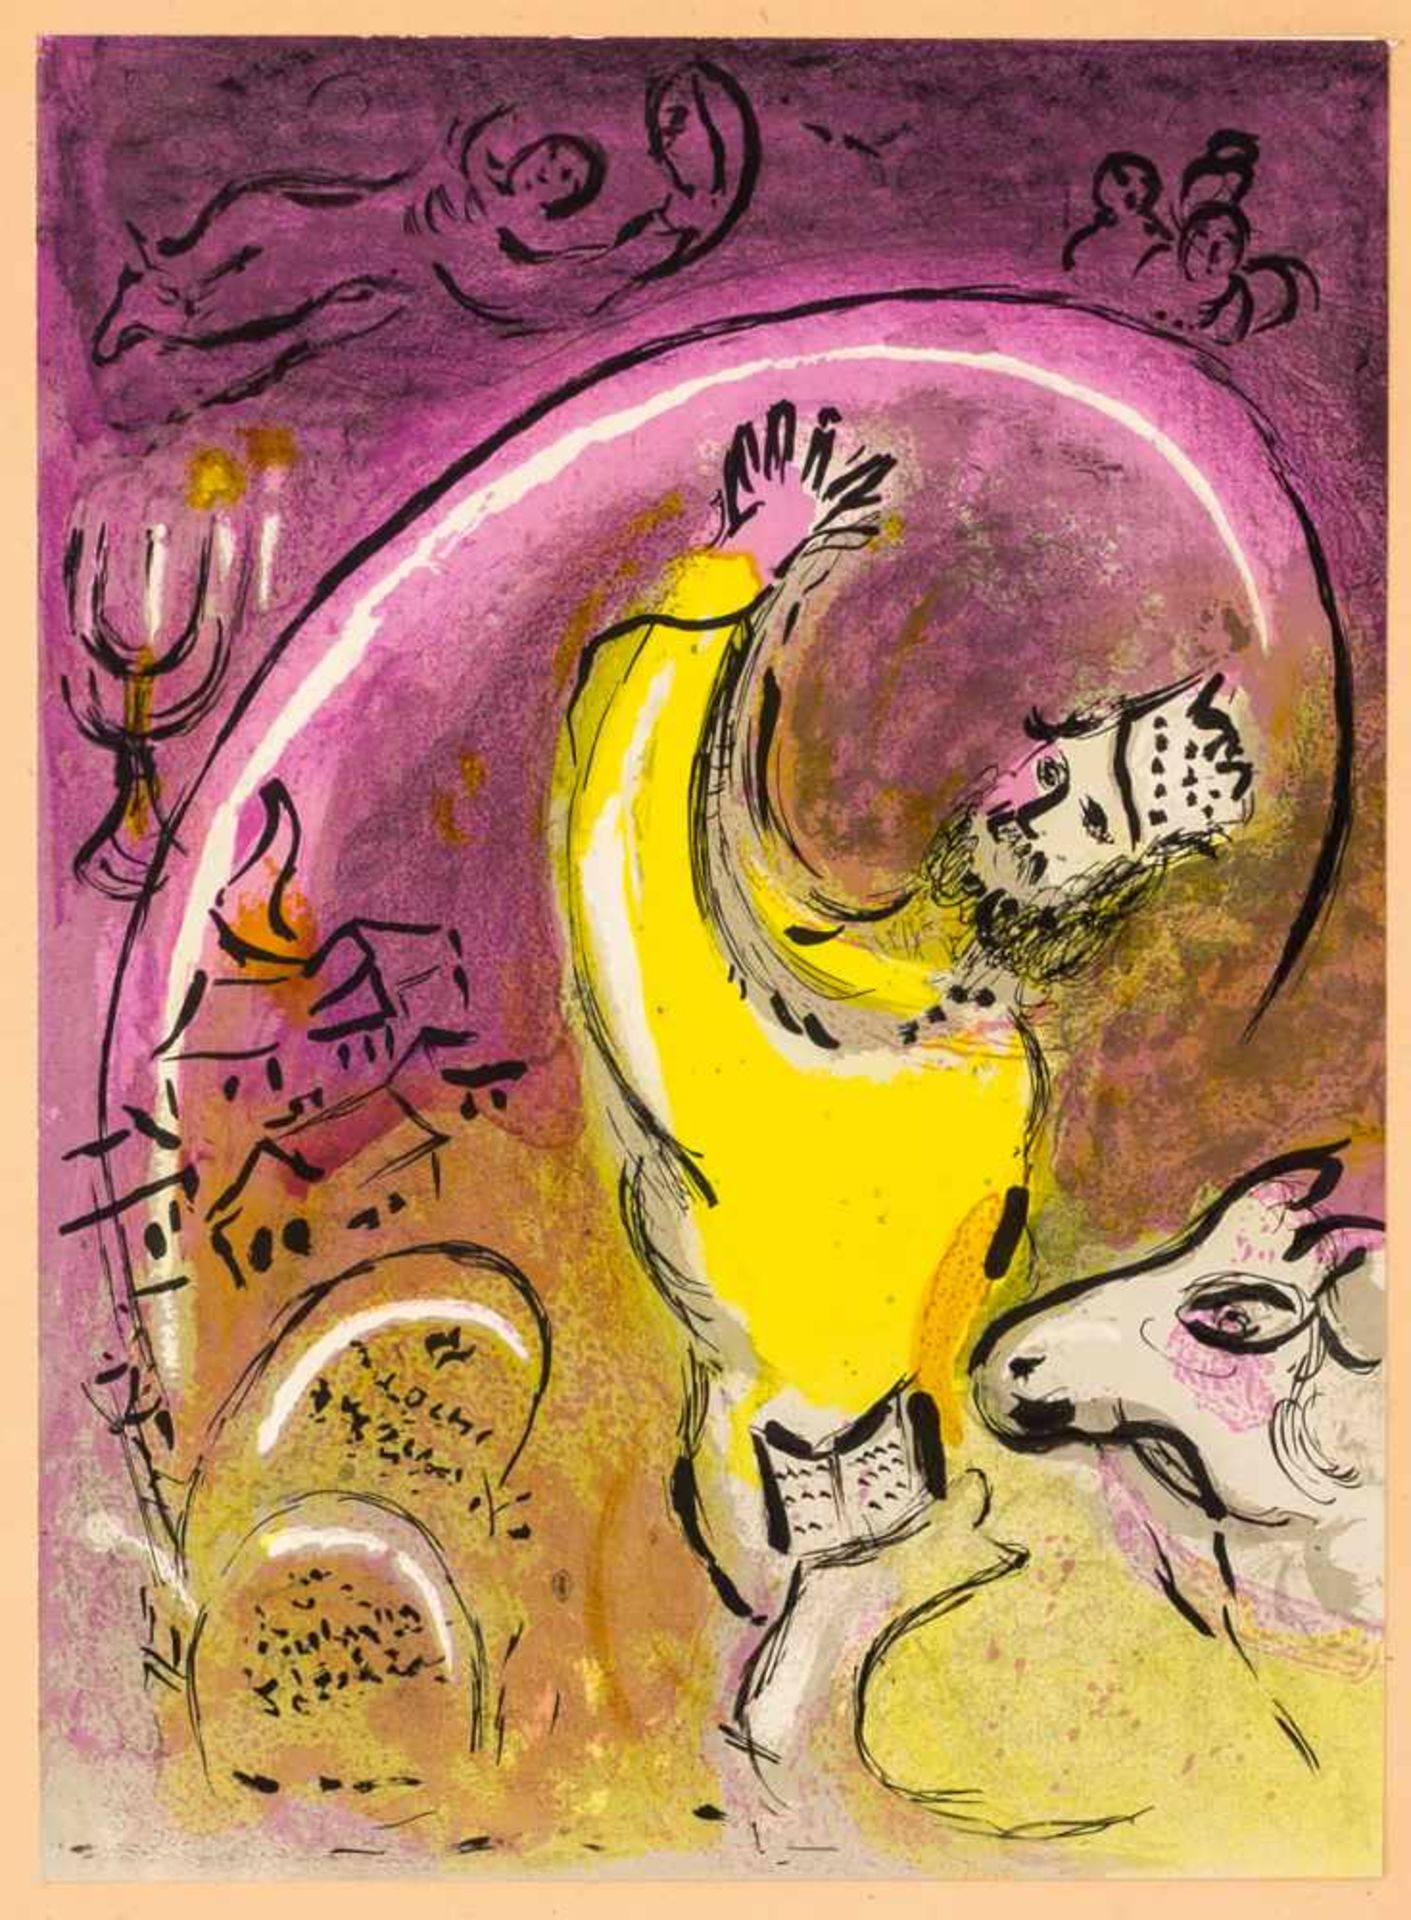 Marc Chagall (1887 - 1985) Salomon Lithographie, 1956 35 x 26 cm Rückseitig ist "Les Rois" zu lesen.